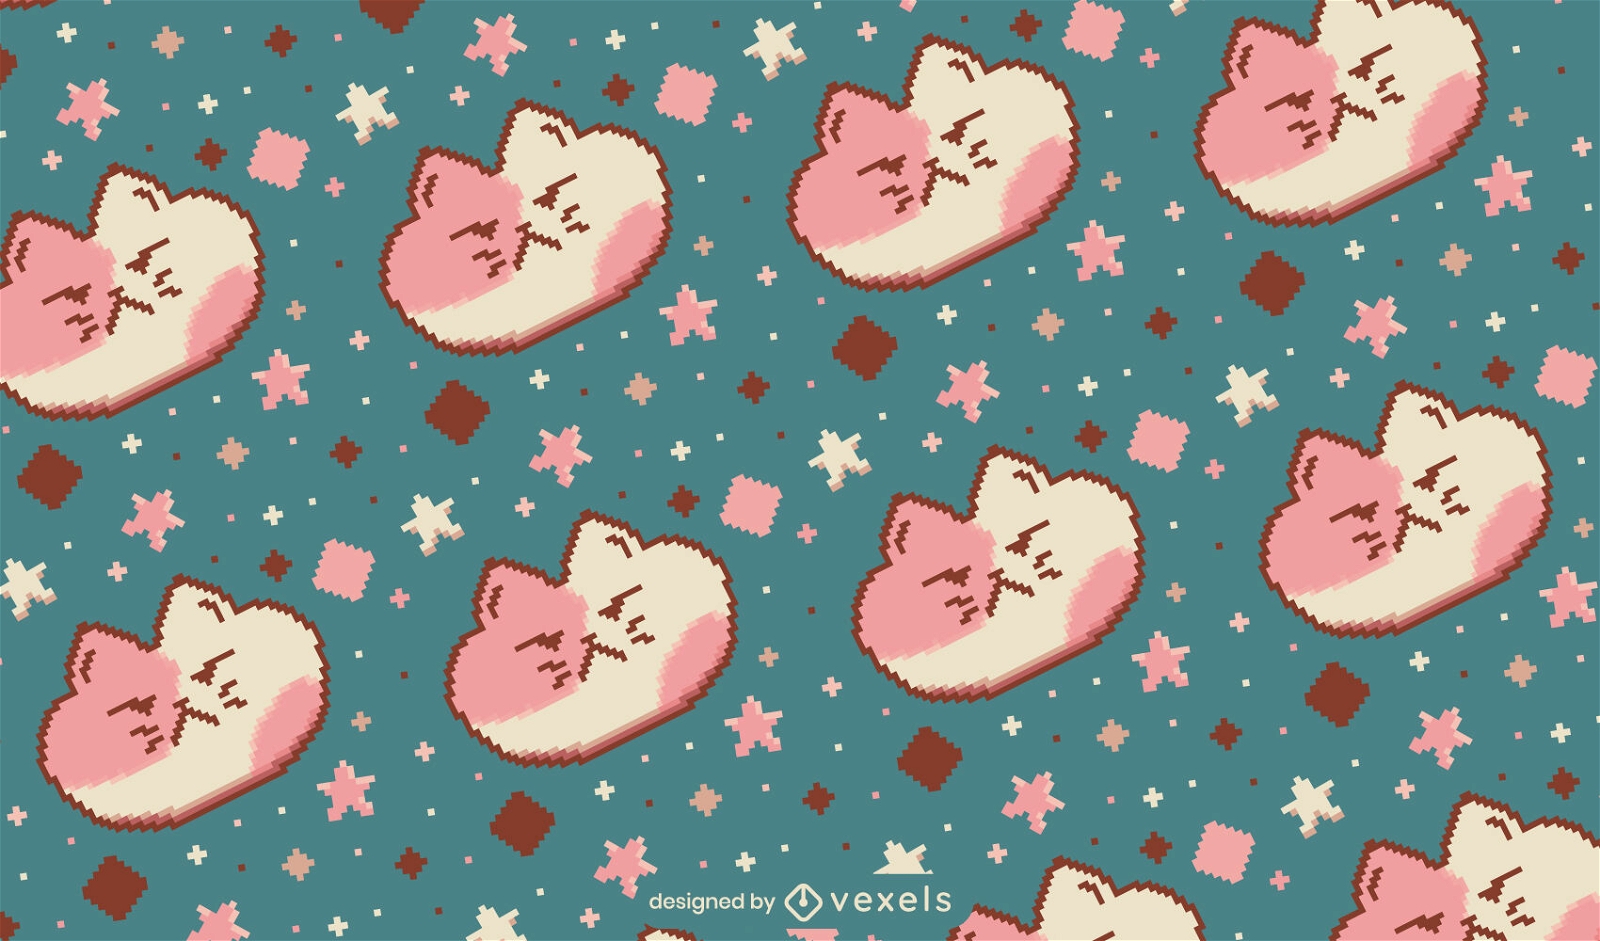 Grumpy cat pixel art pattern design